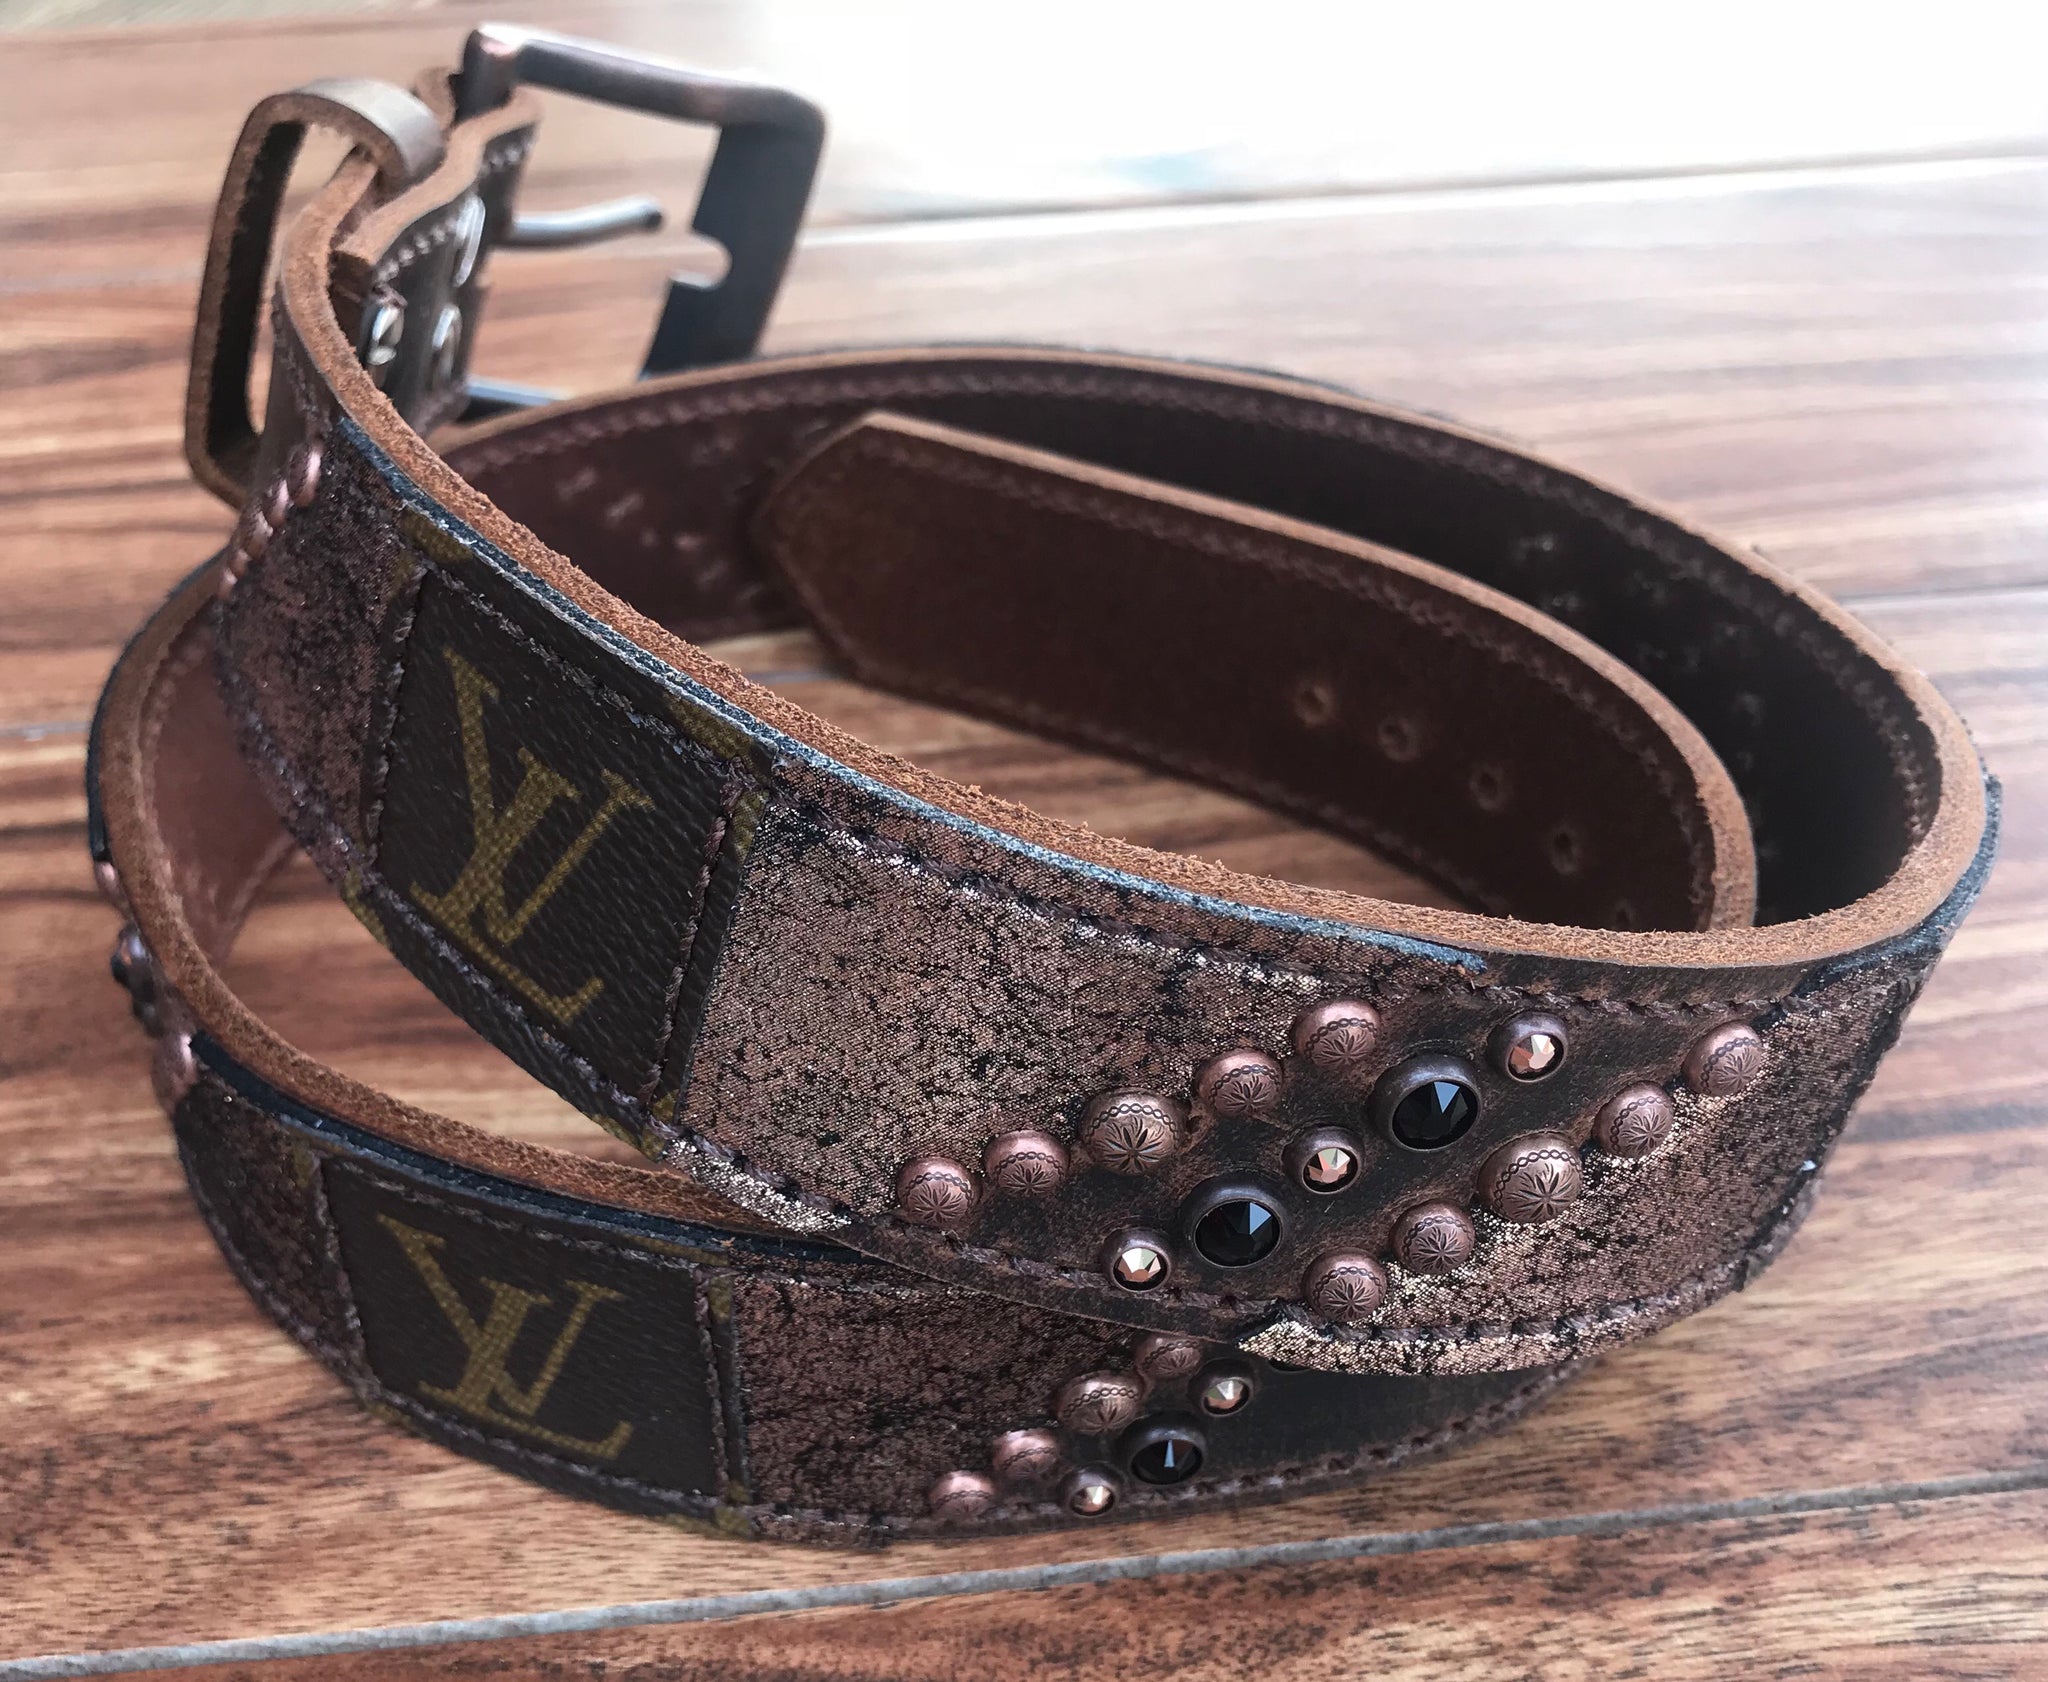 Serape leather with repurposed LVOverlay